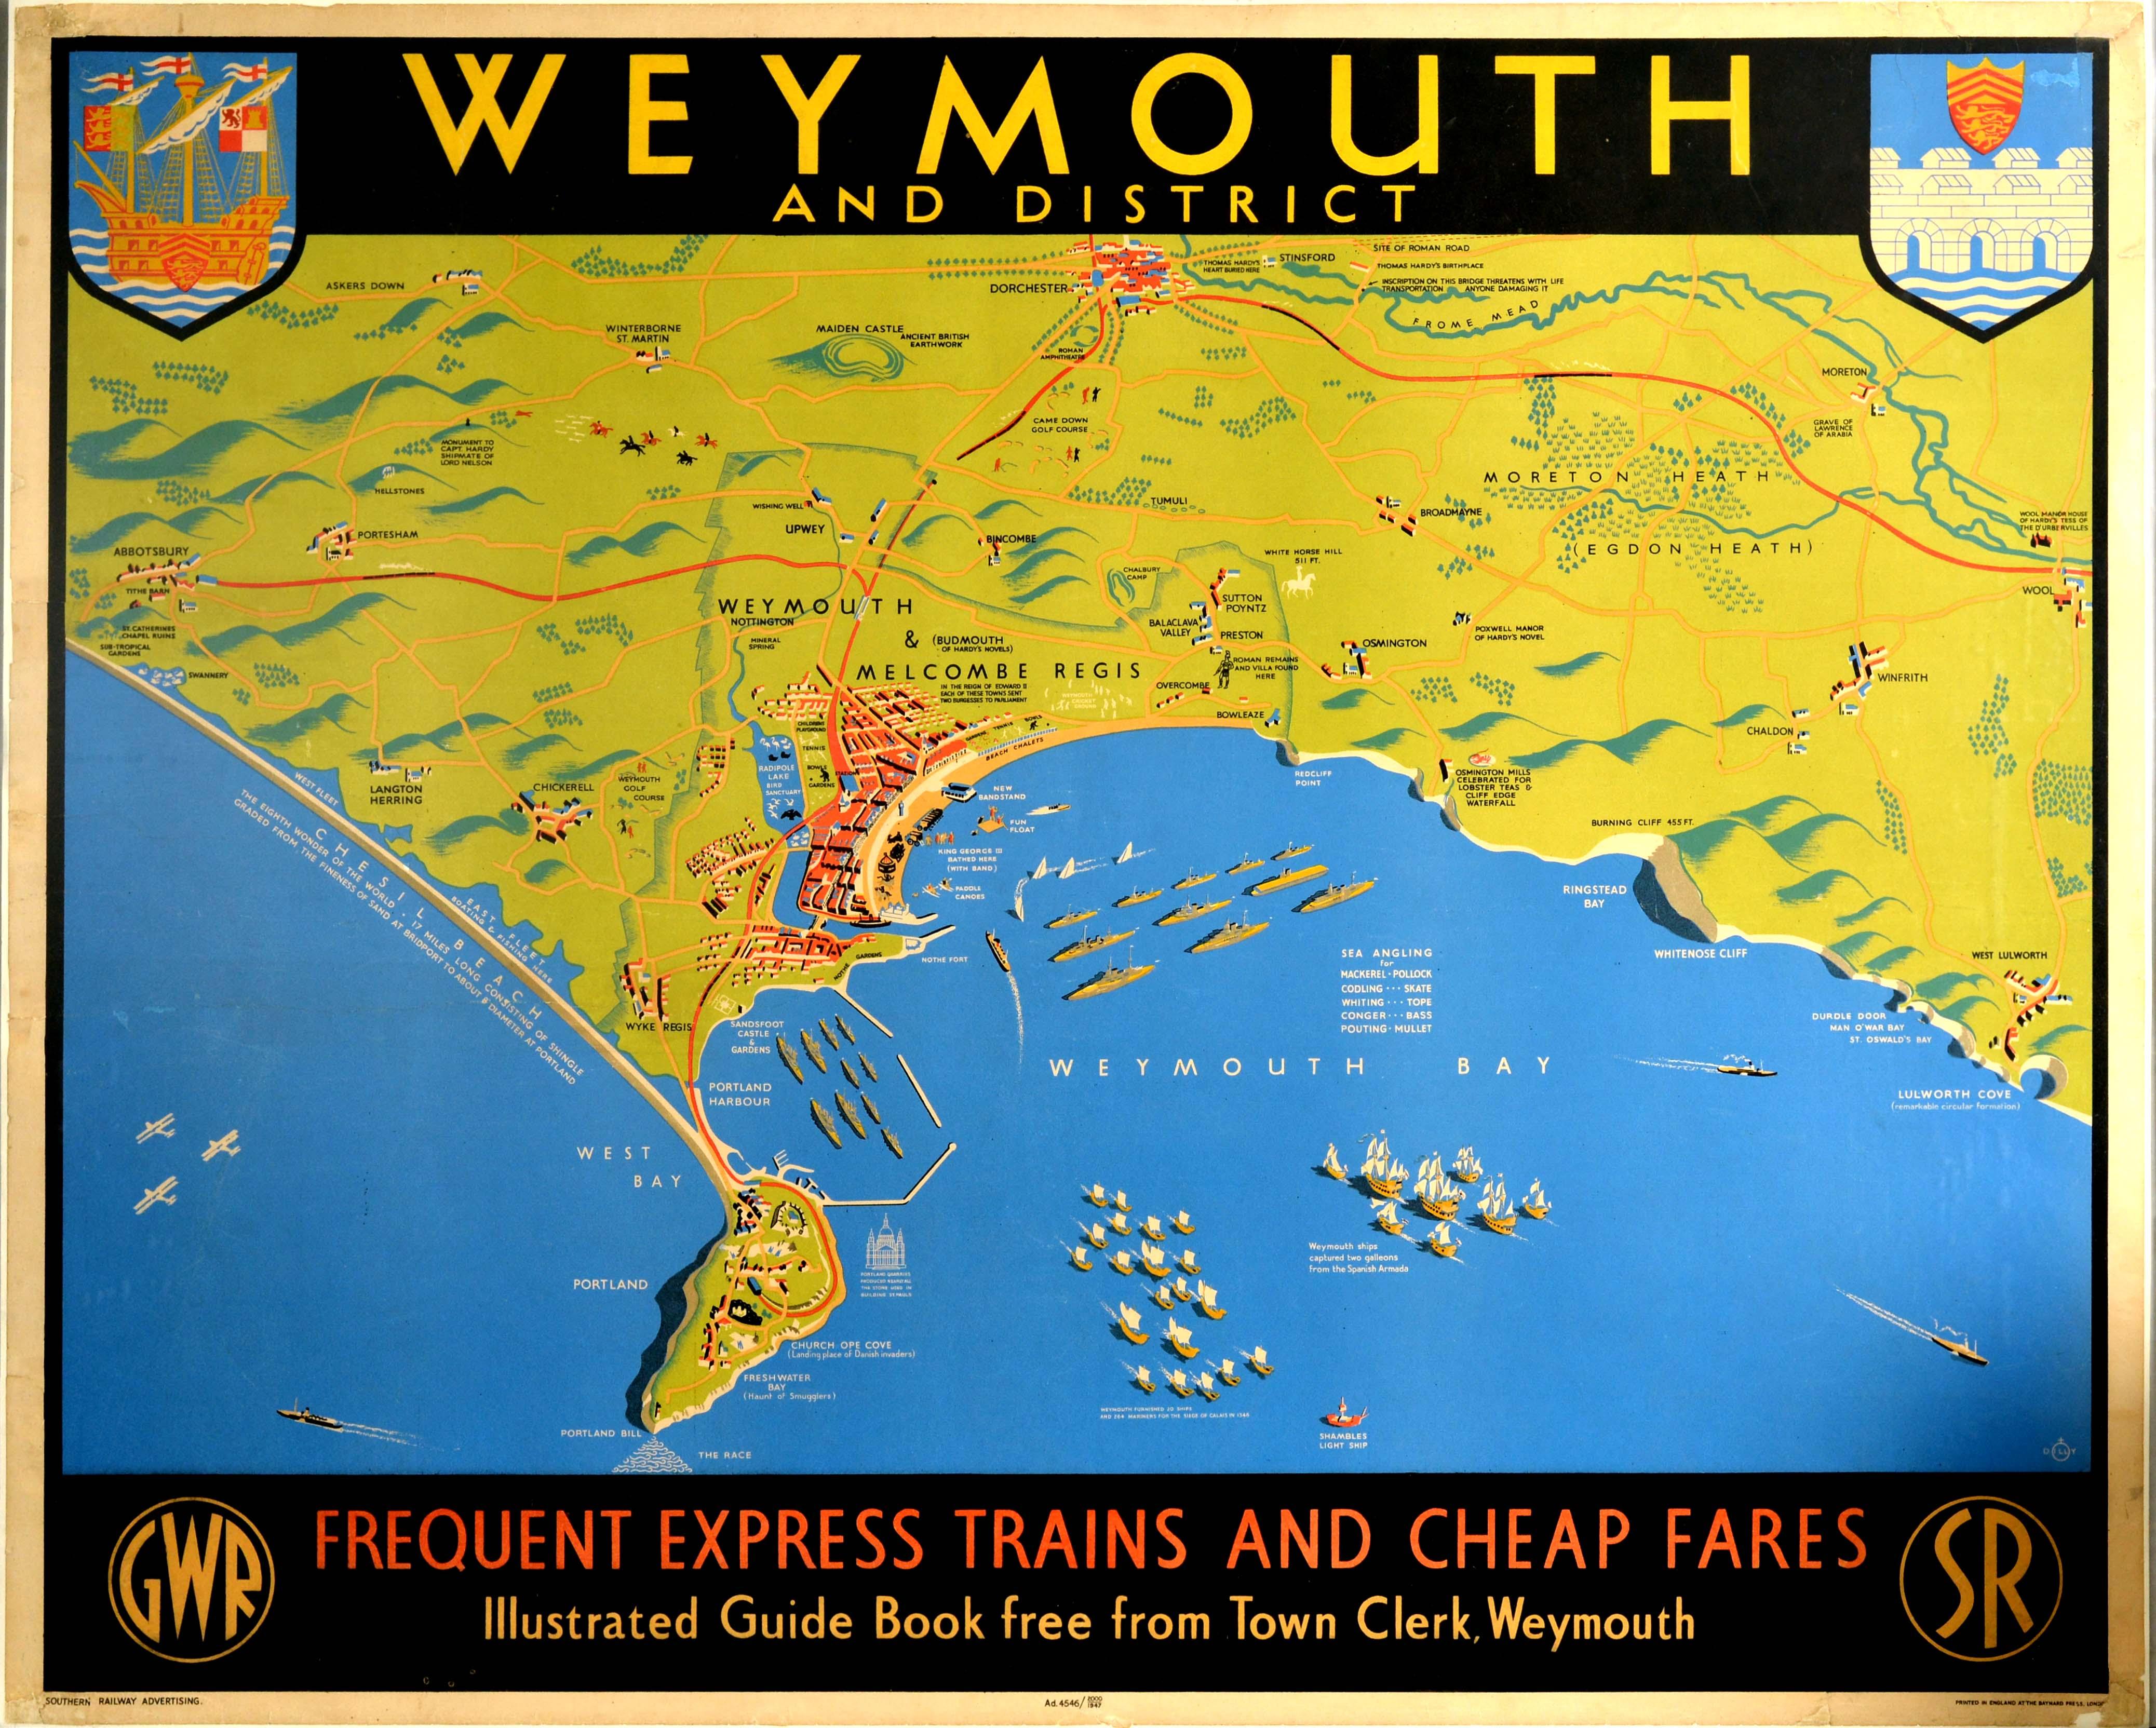 Unknown Print - Original Vintage Railway Travel Poster Weymouth GWR SR Railway Map Express Train